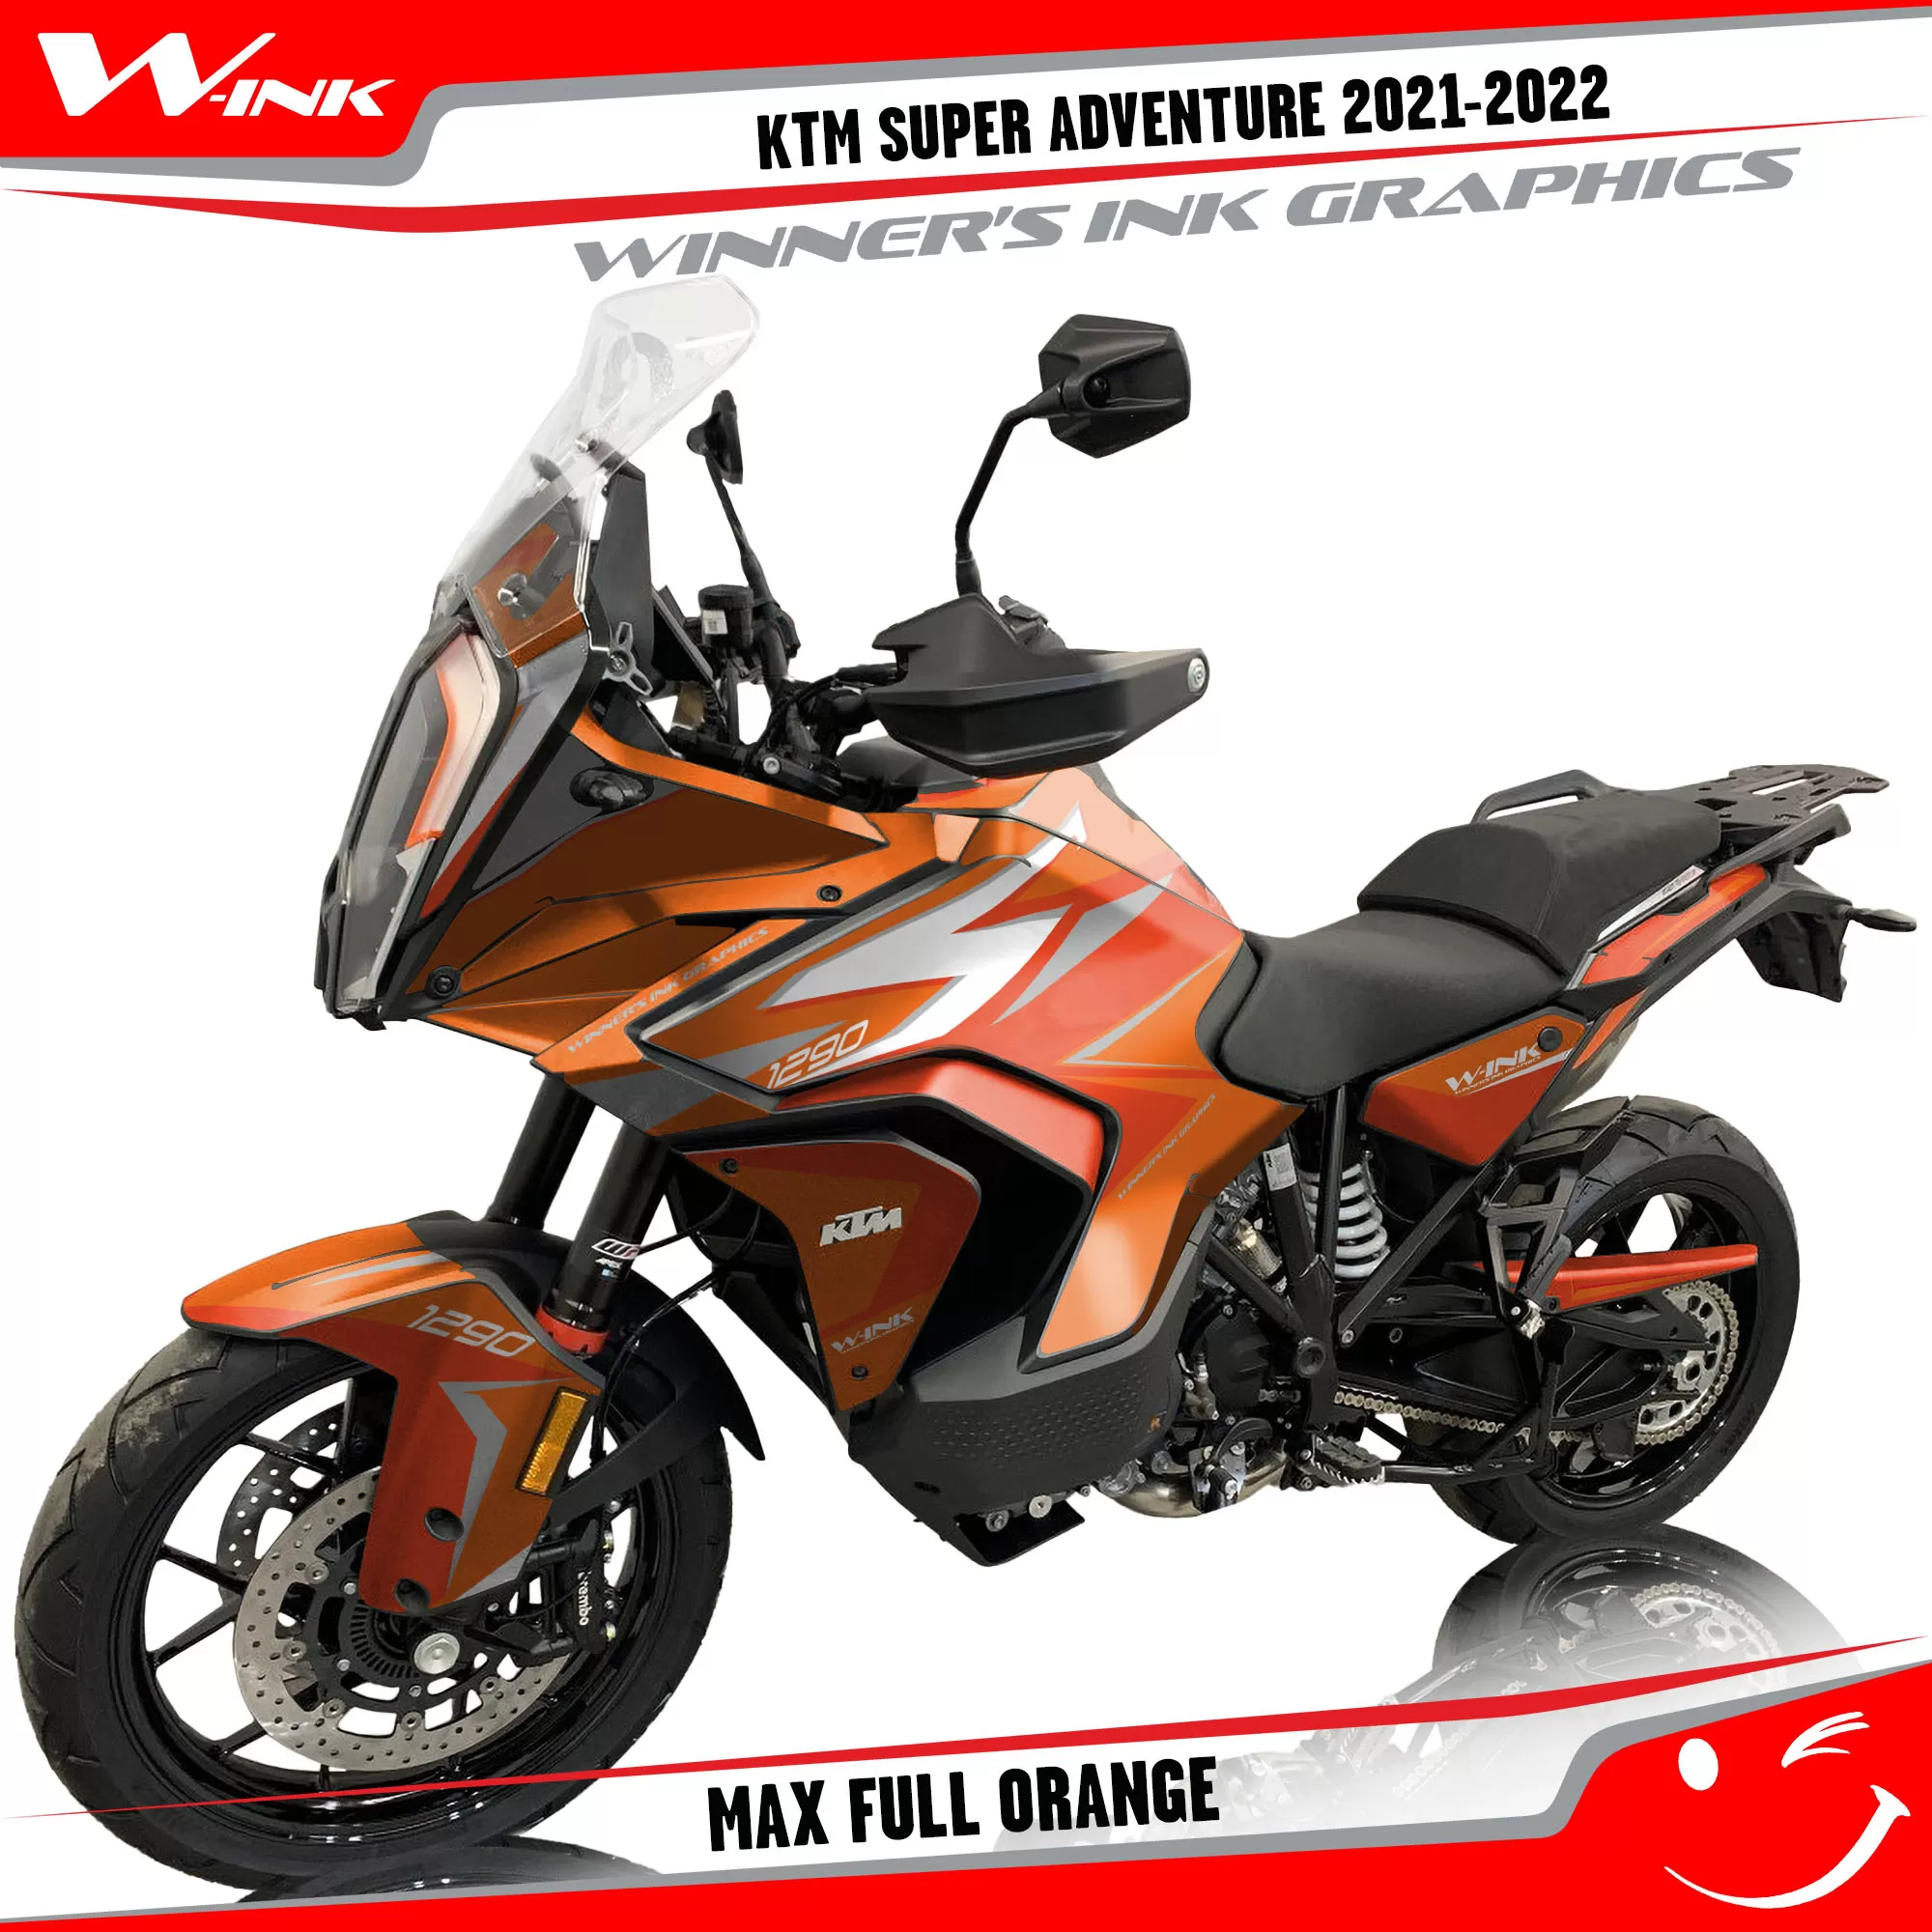 KTM-Super-Adventure-S-2021-2022-graphics-kit-and-decals-with-designs-Max-Full-Orange